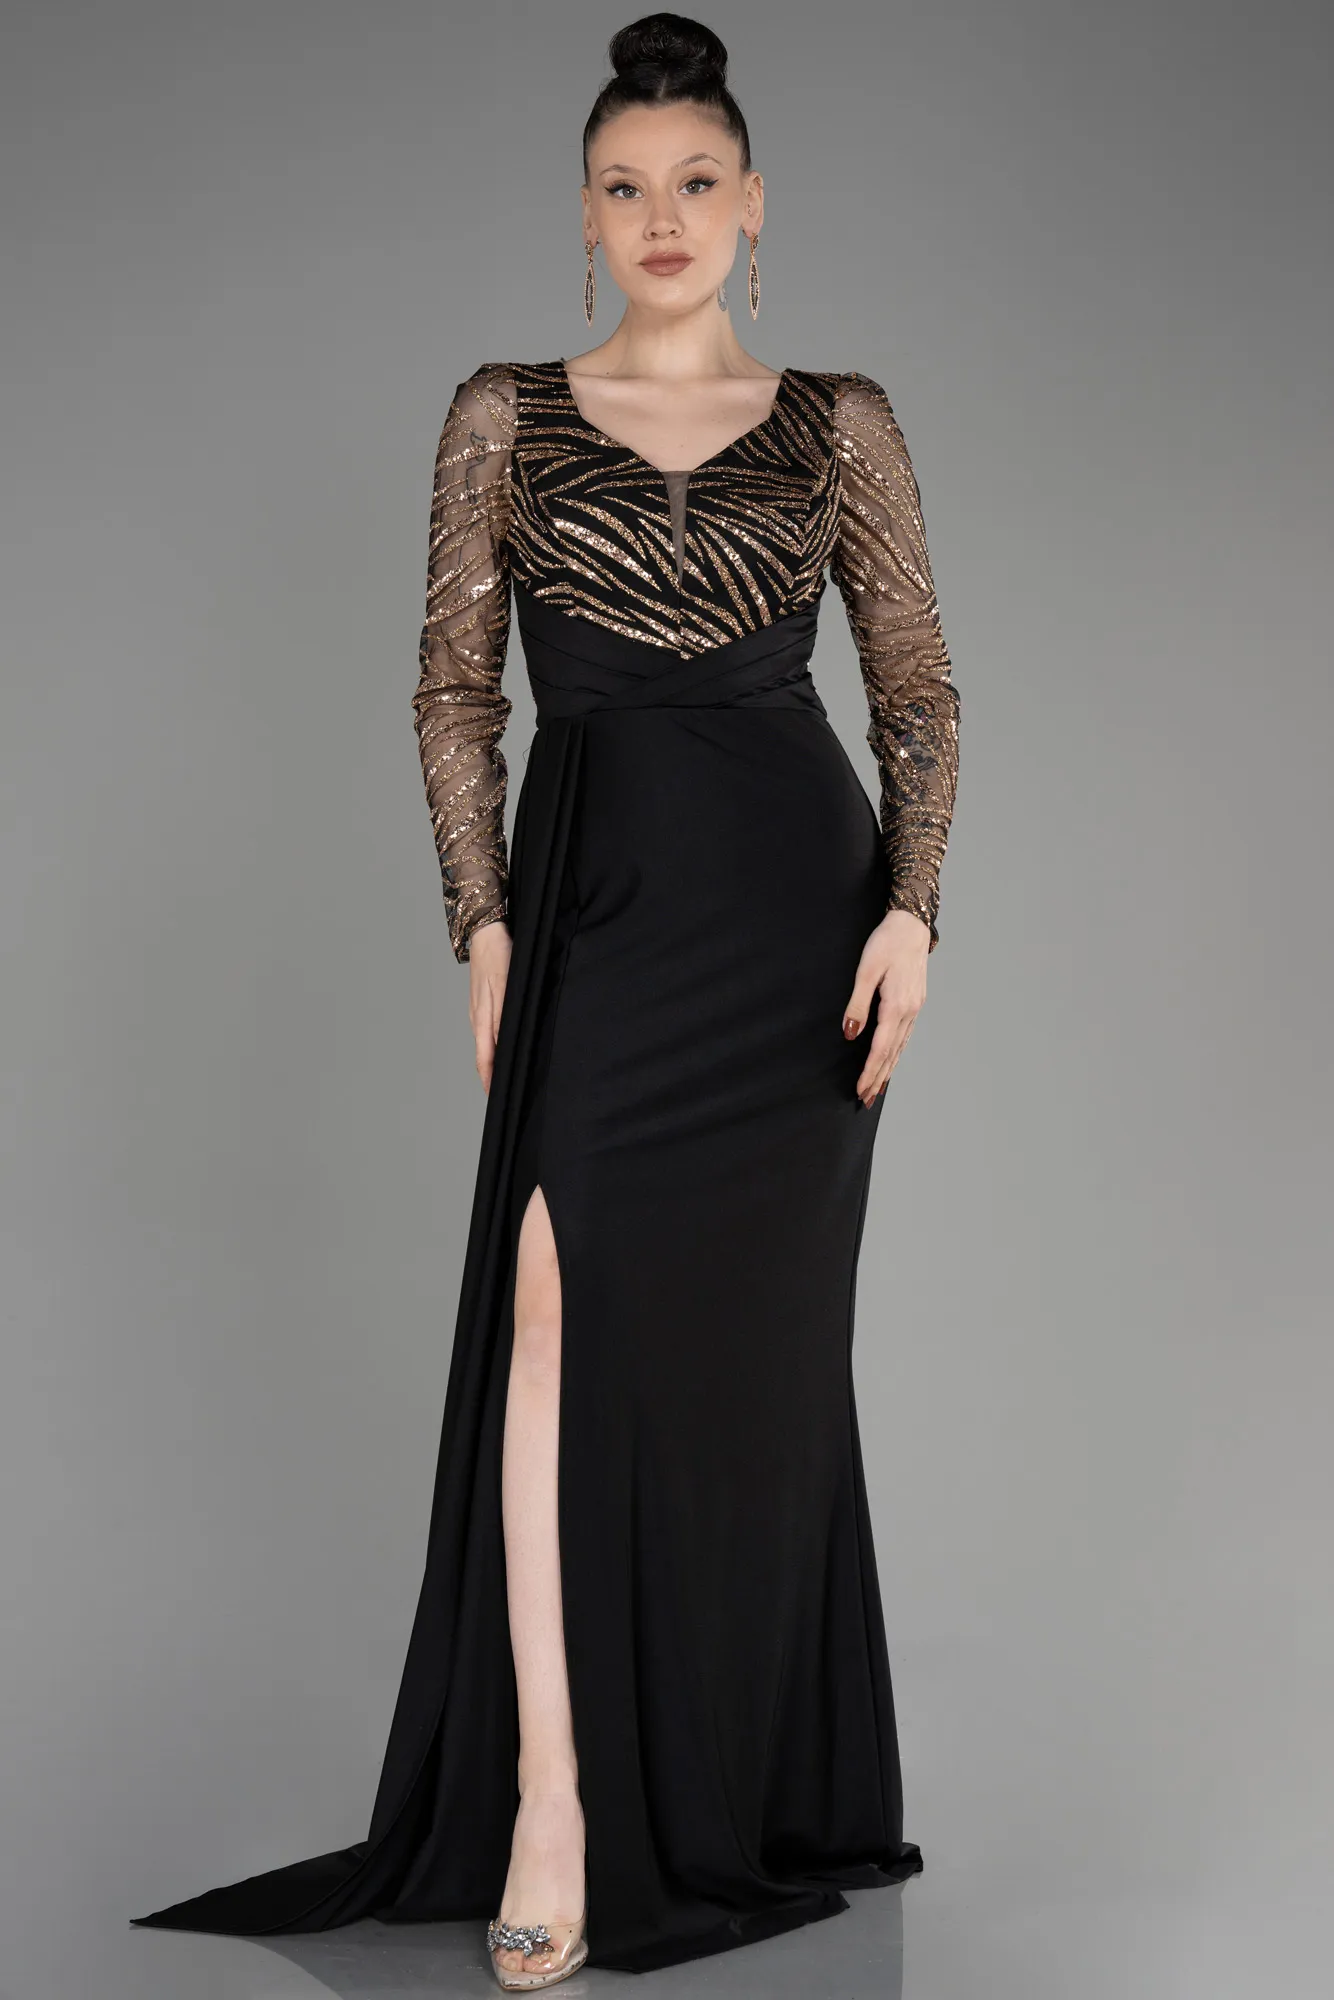 Black-Gold-Long Sleeve Evening Dress ABU3834